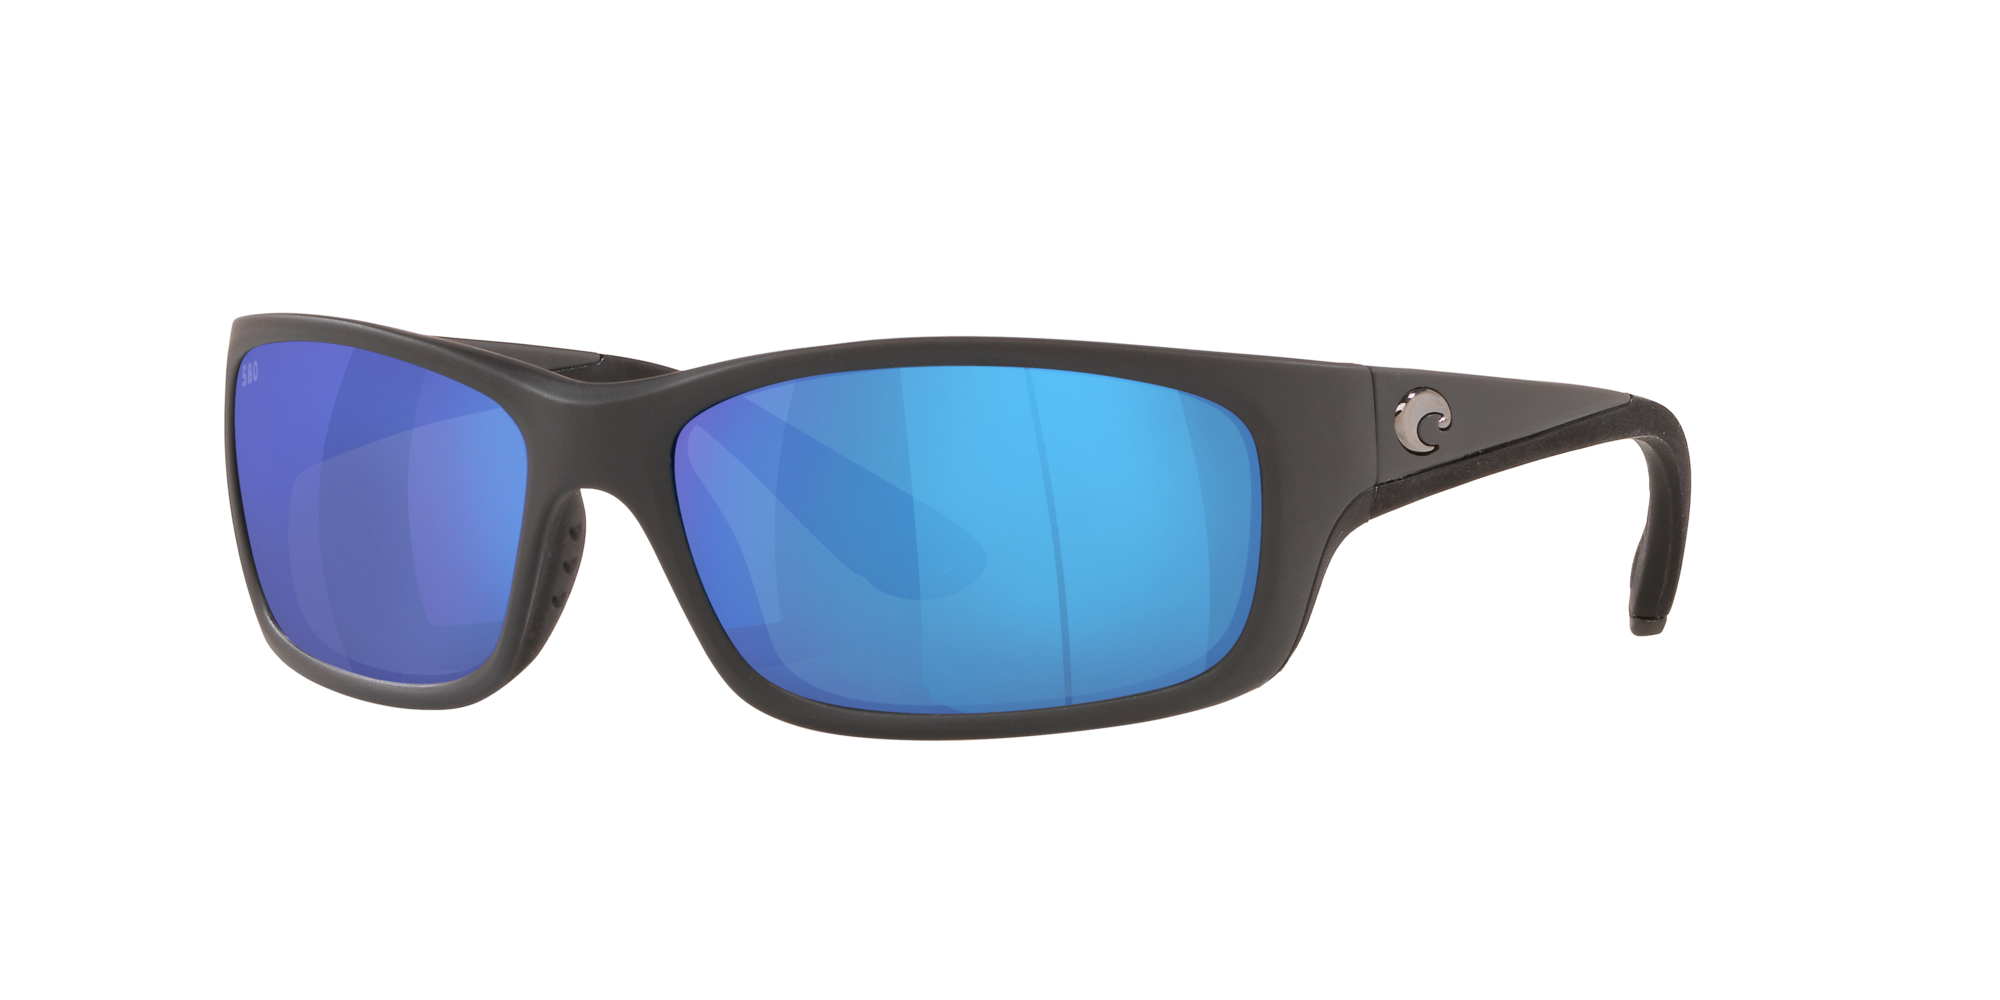 Costa Del Mar Jose Shiny Black Sunglasses Blue Polarized Lens JO 11 OBMP $209